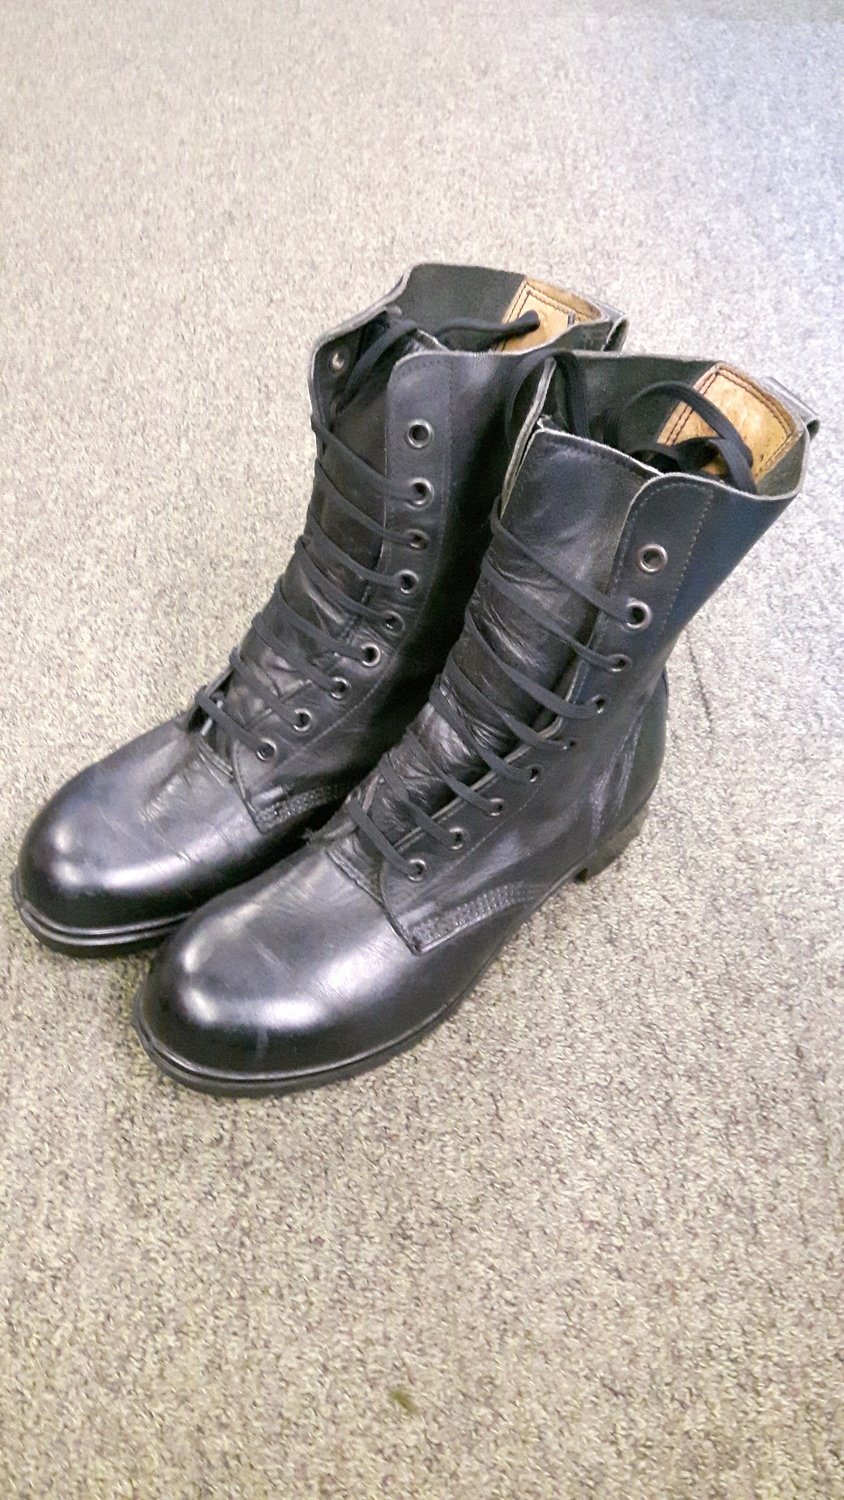 British Army High Leg Boots Size 9s